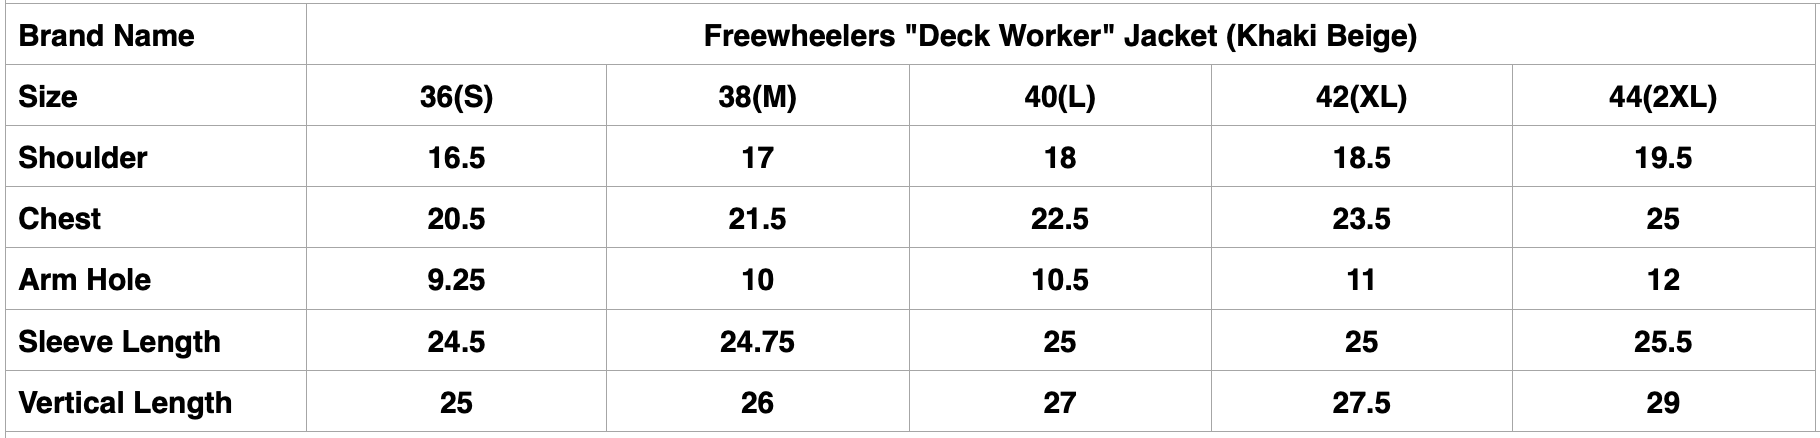 Freewheelers "Deck Worker" Jacket (Khaki Beige)